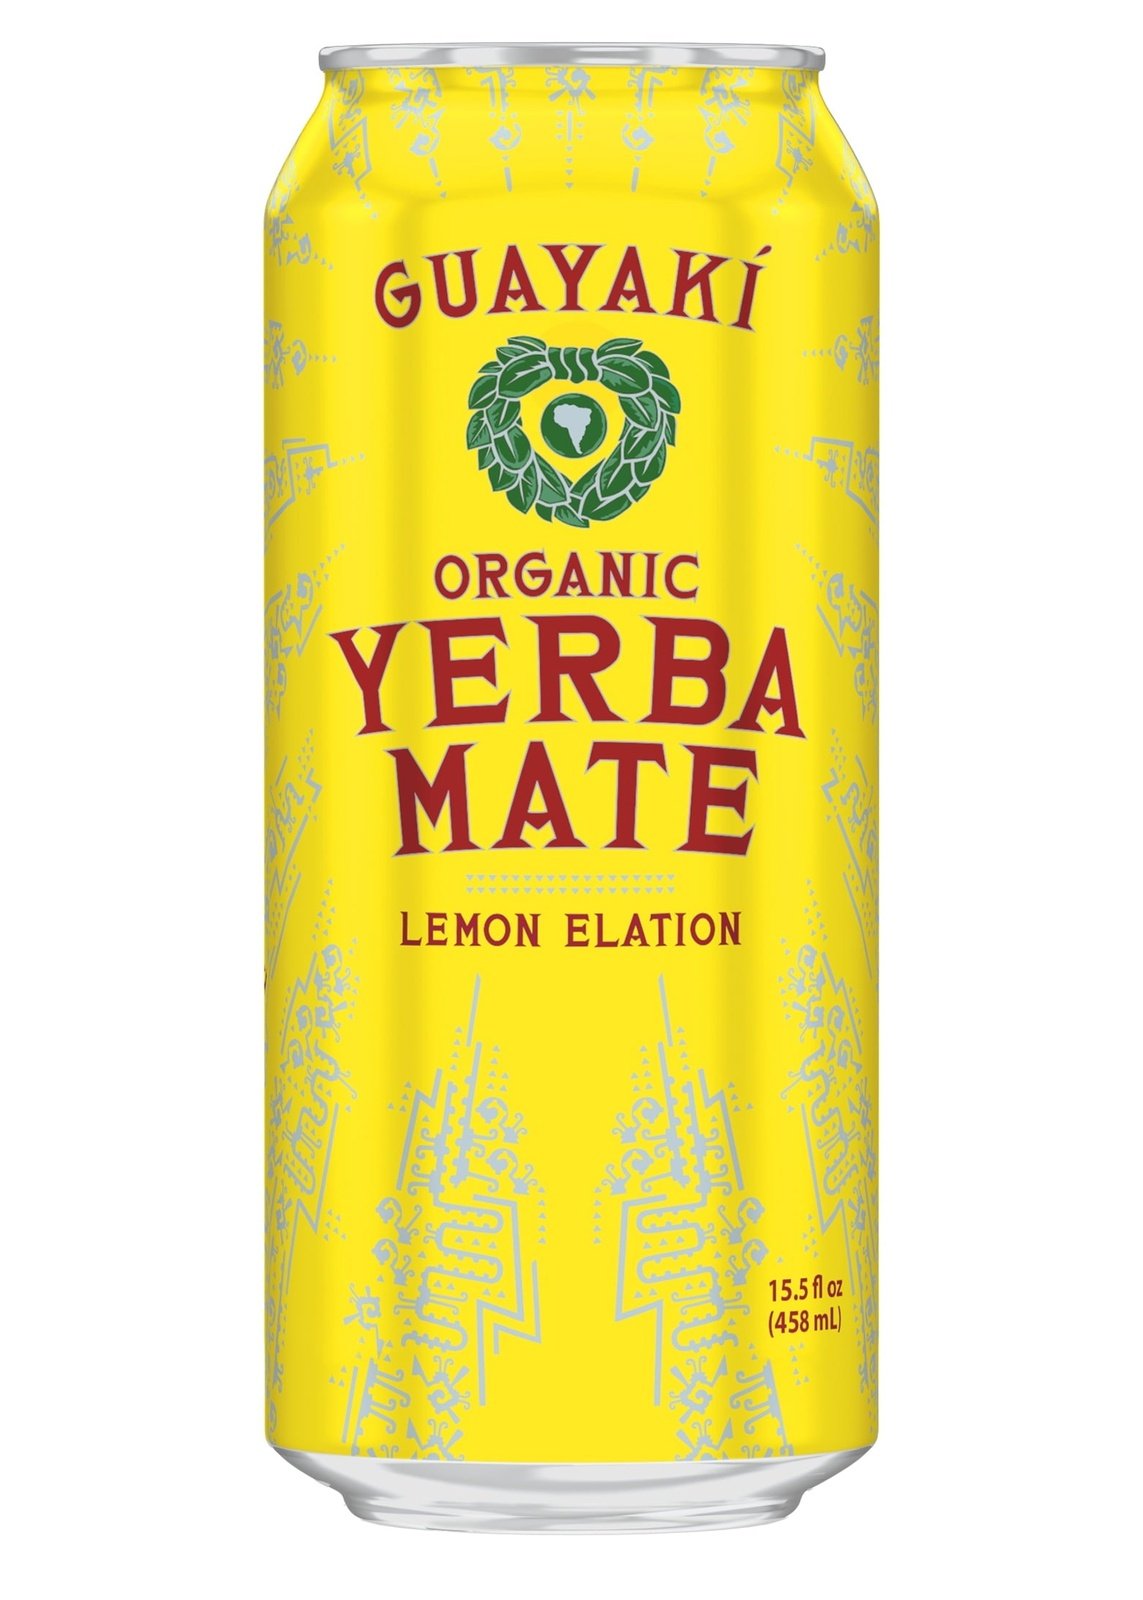 GUAYAKI Yerbamate Lemon Elation